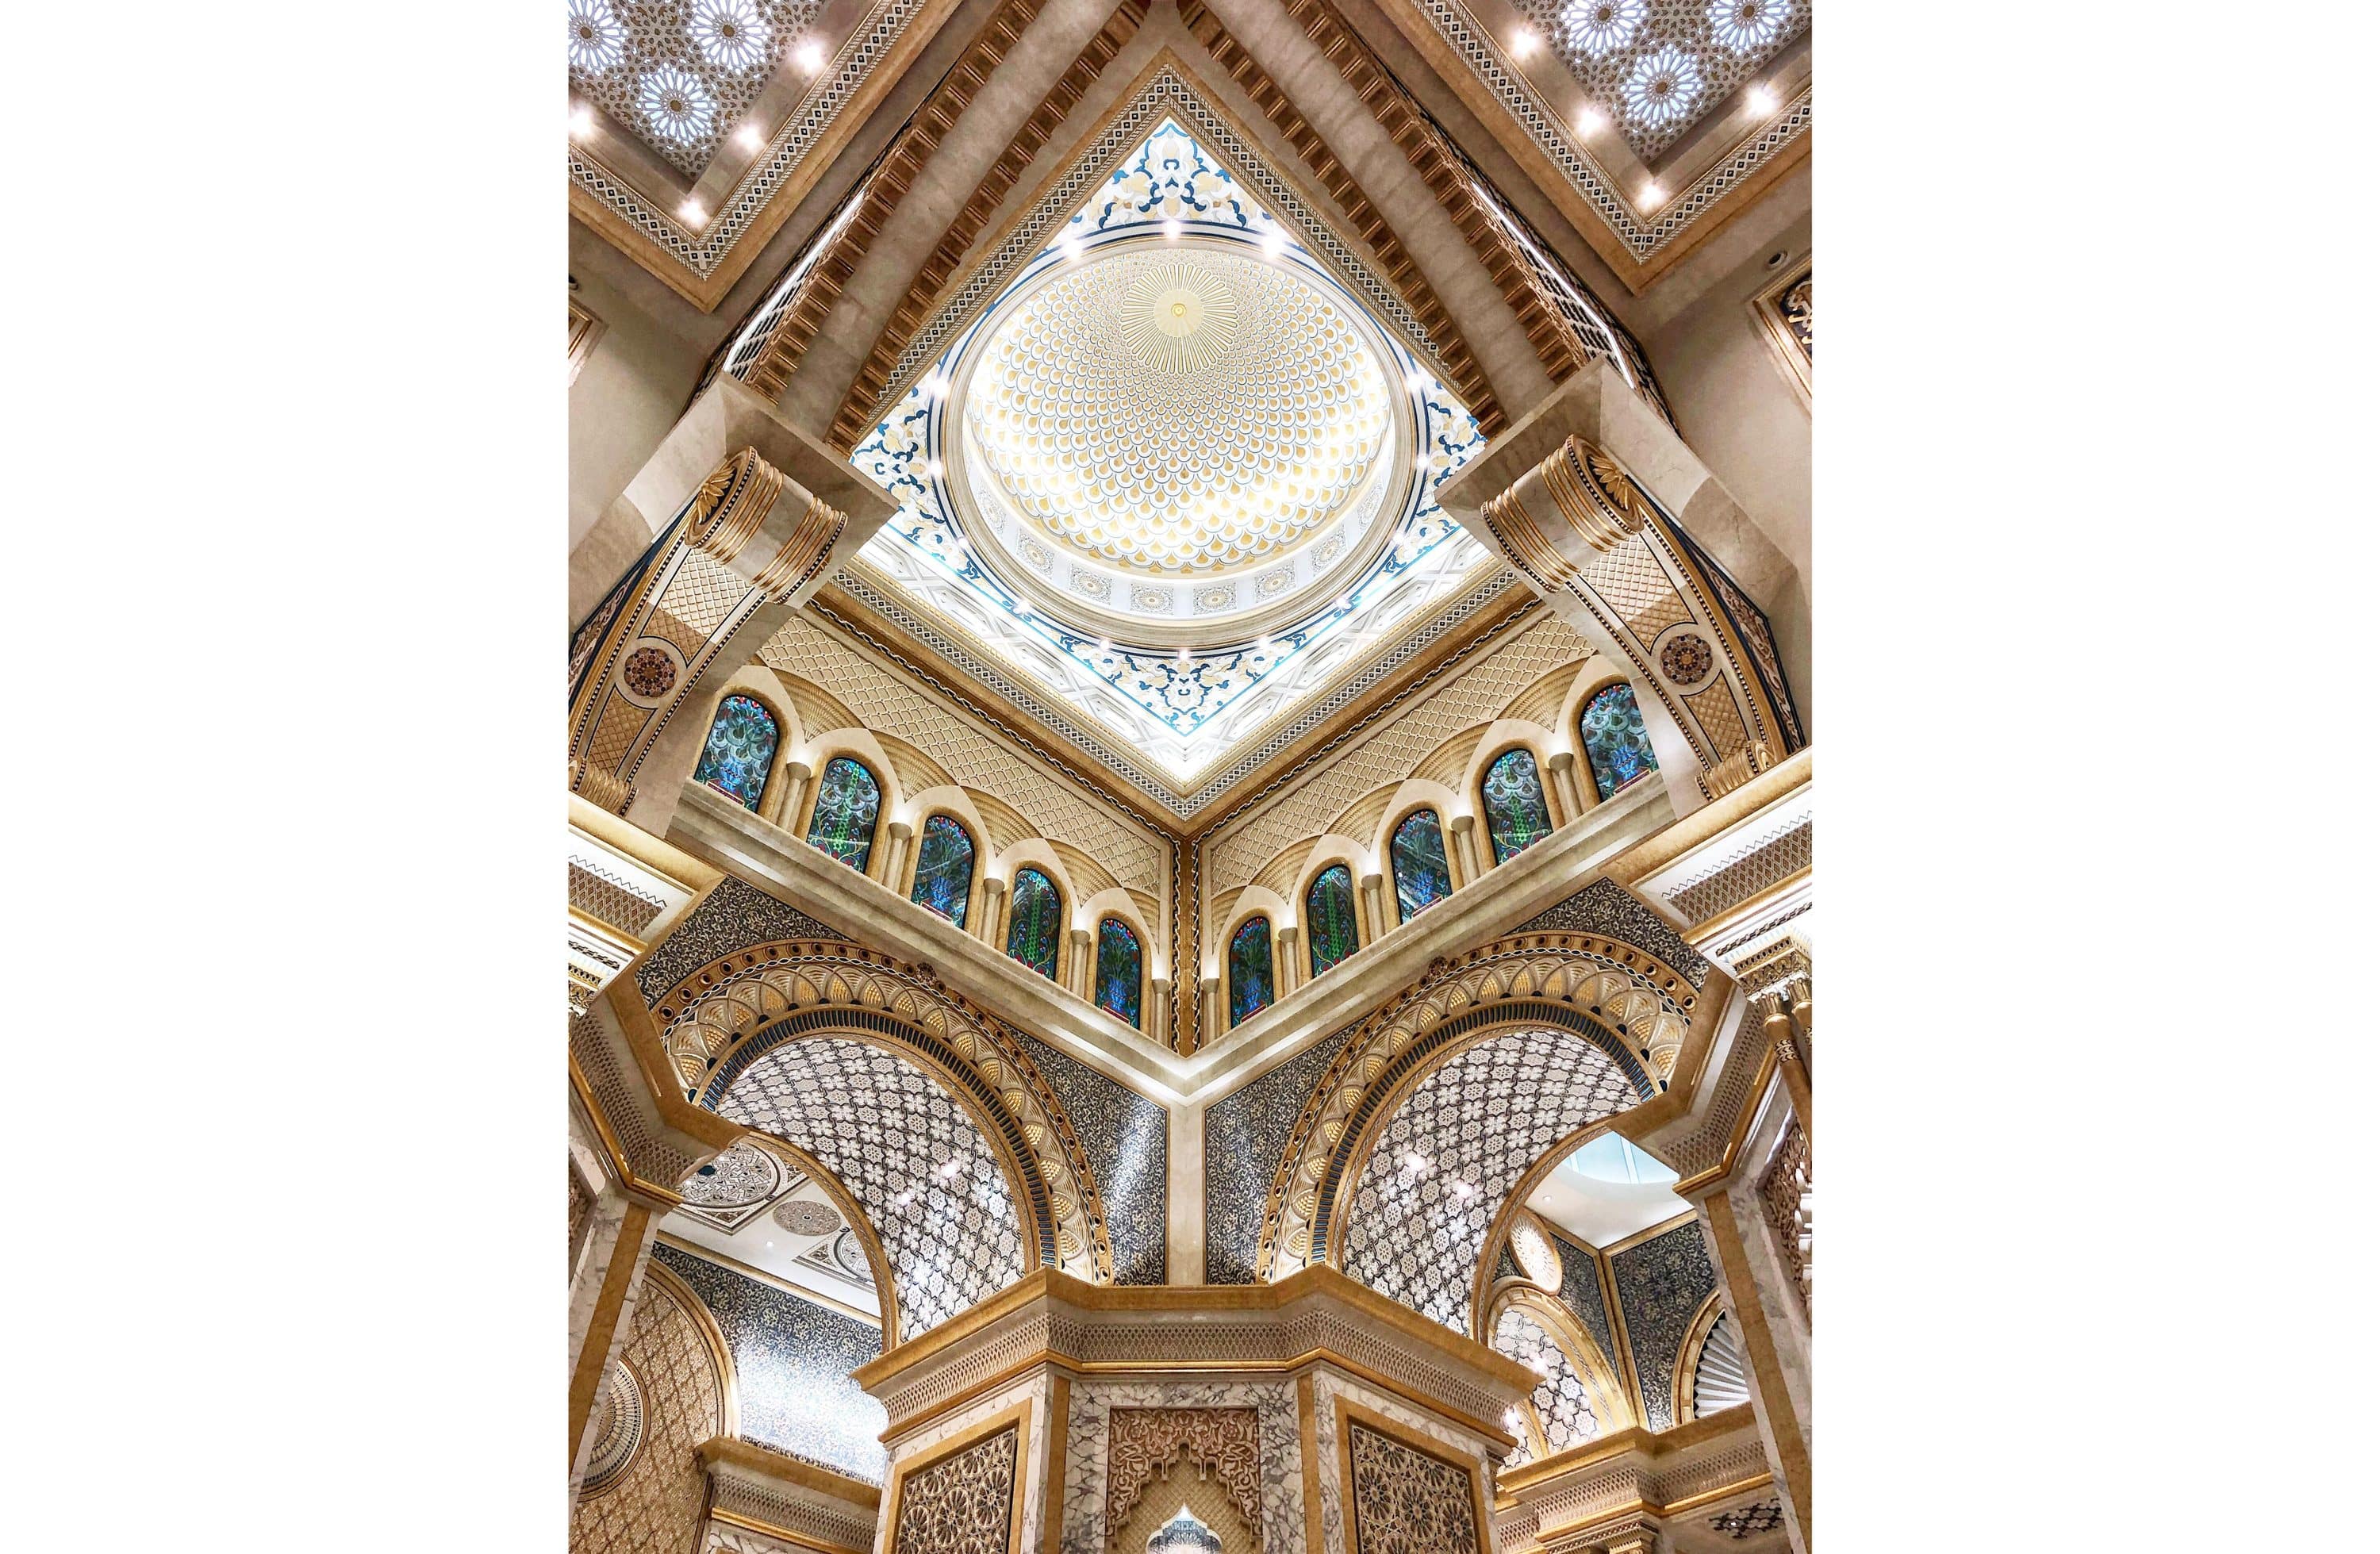 Vaulted ceiling of Qasr Al Watan Palace, Abu Dhabi